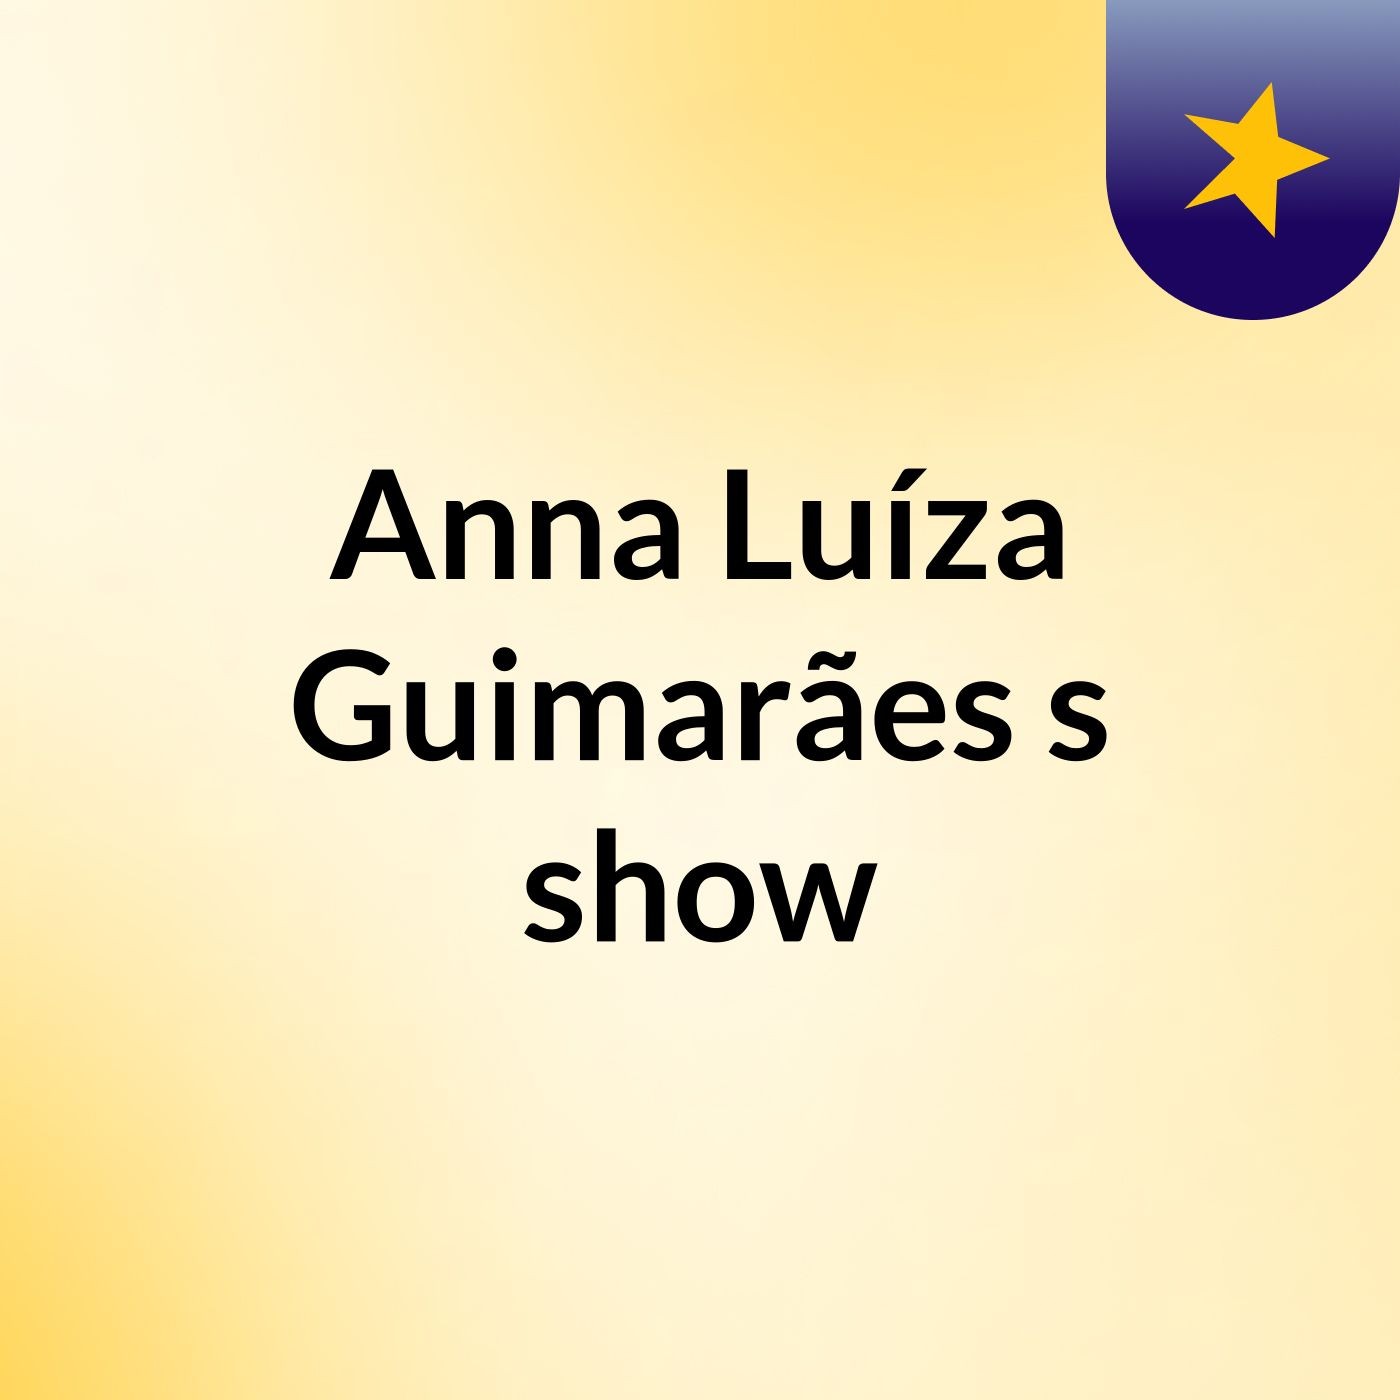 Anna Luíza Guimarães's show